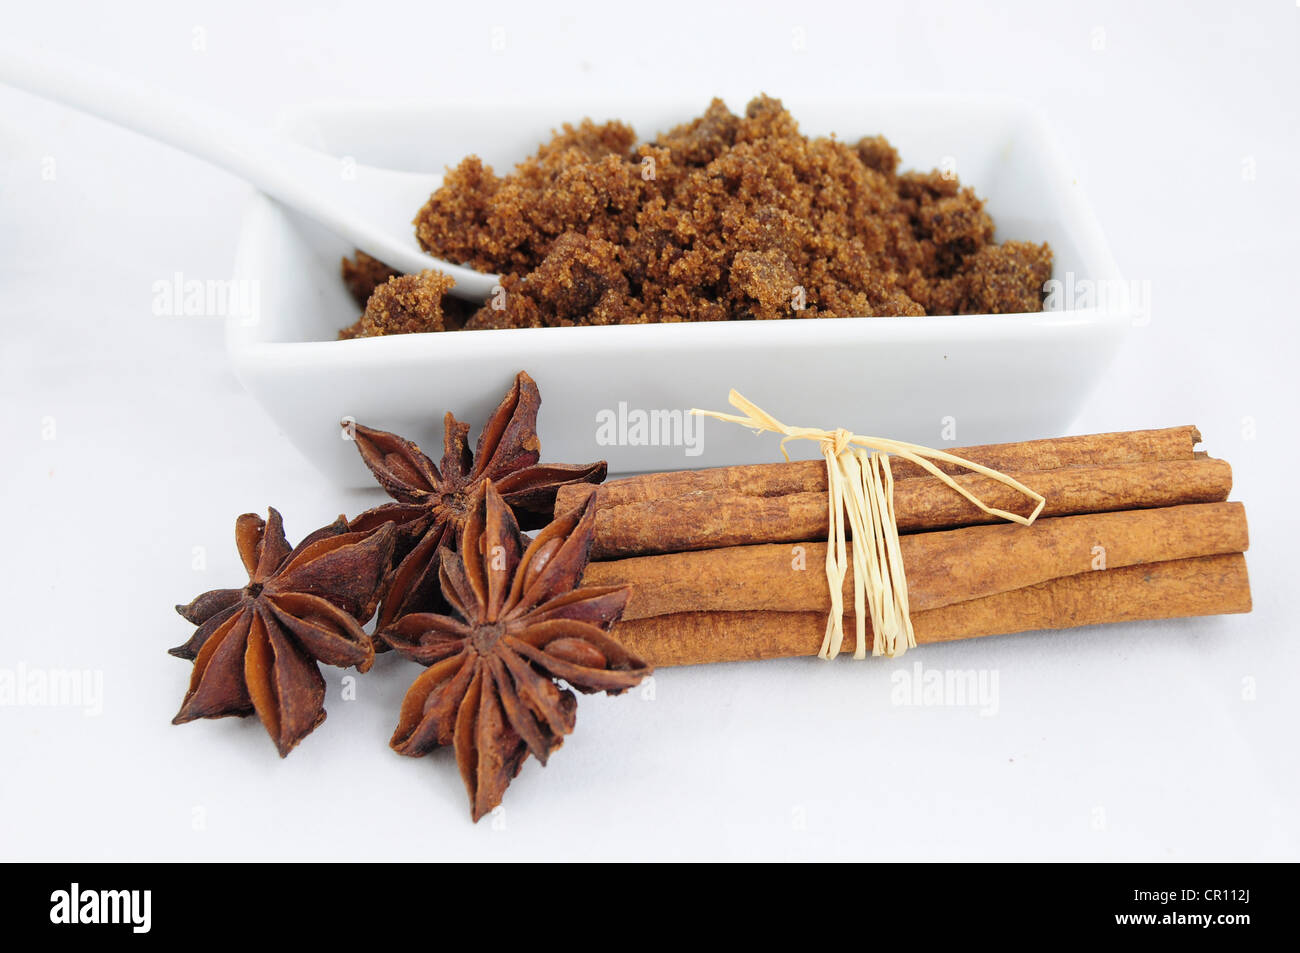 Sweet ingredients - brown sugar, cinnamon sticks and anise Stock Photo